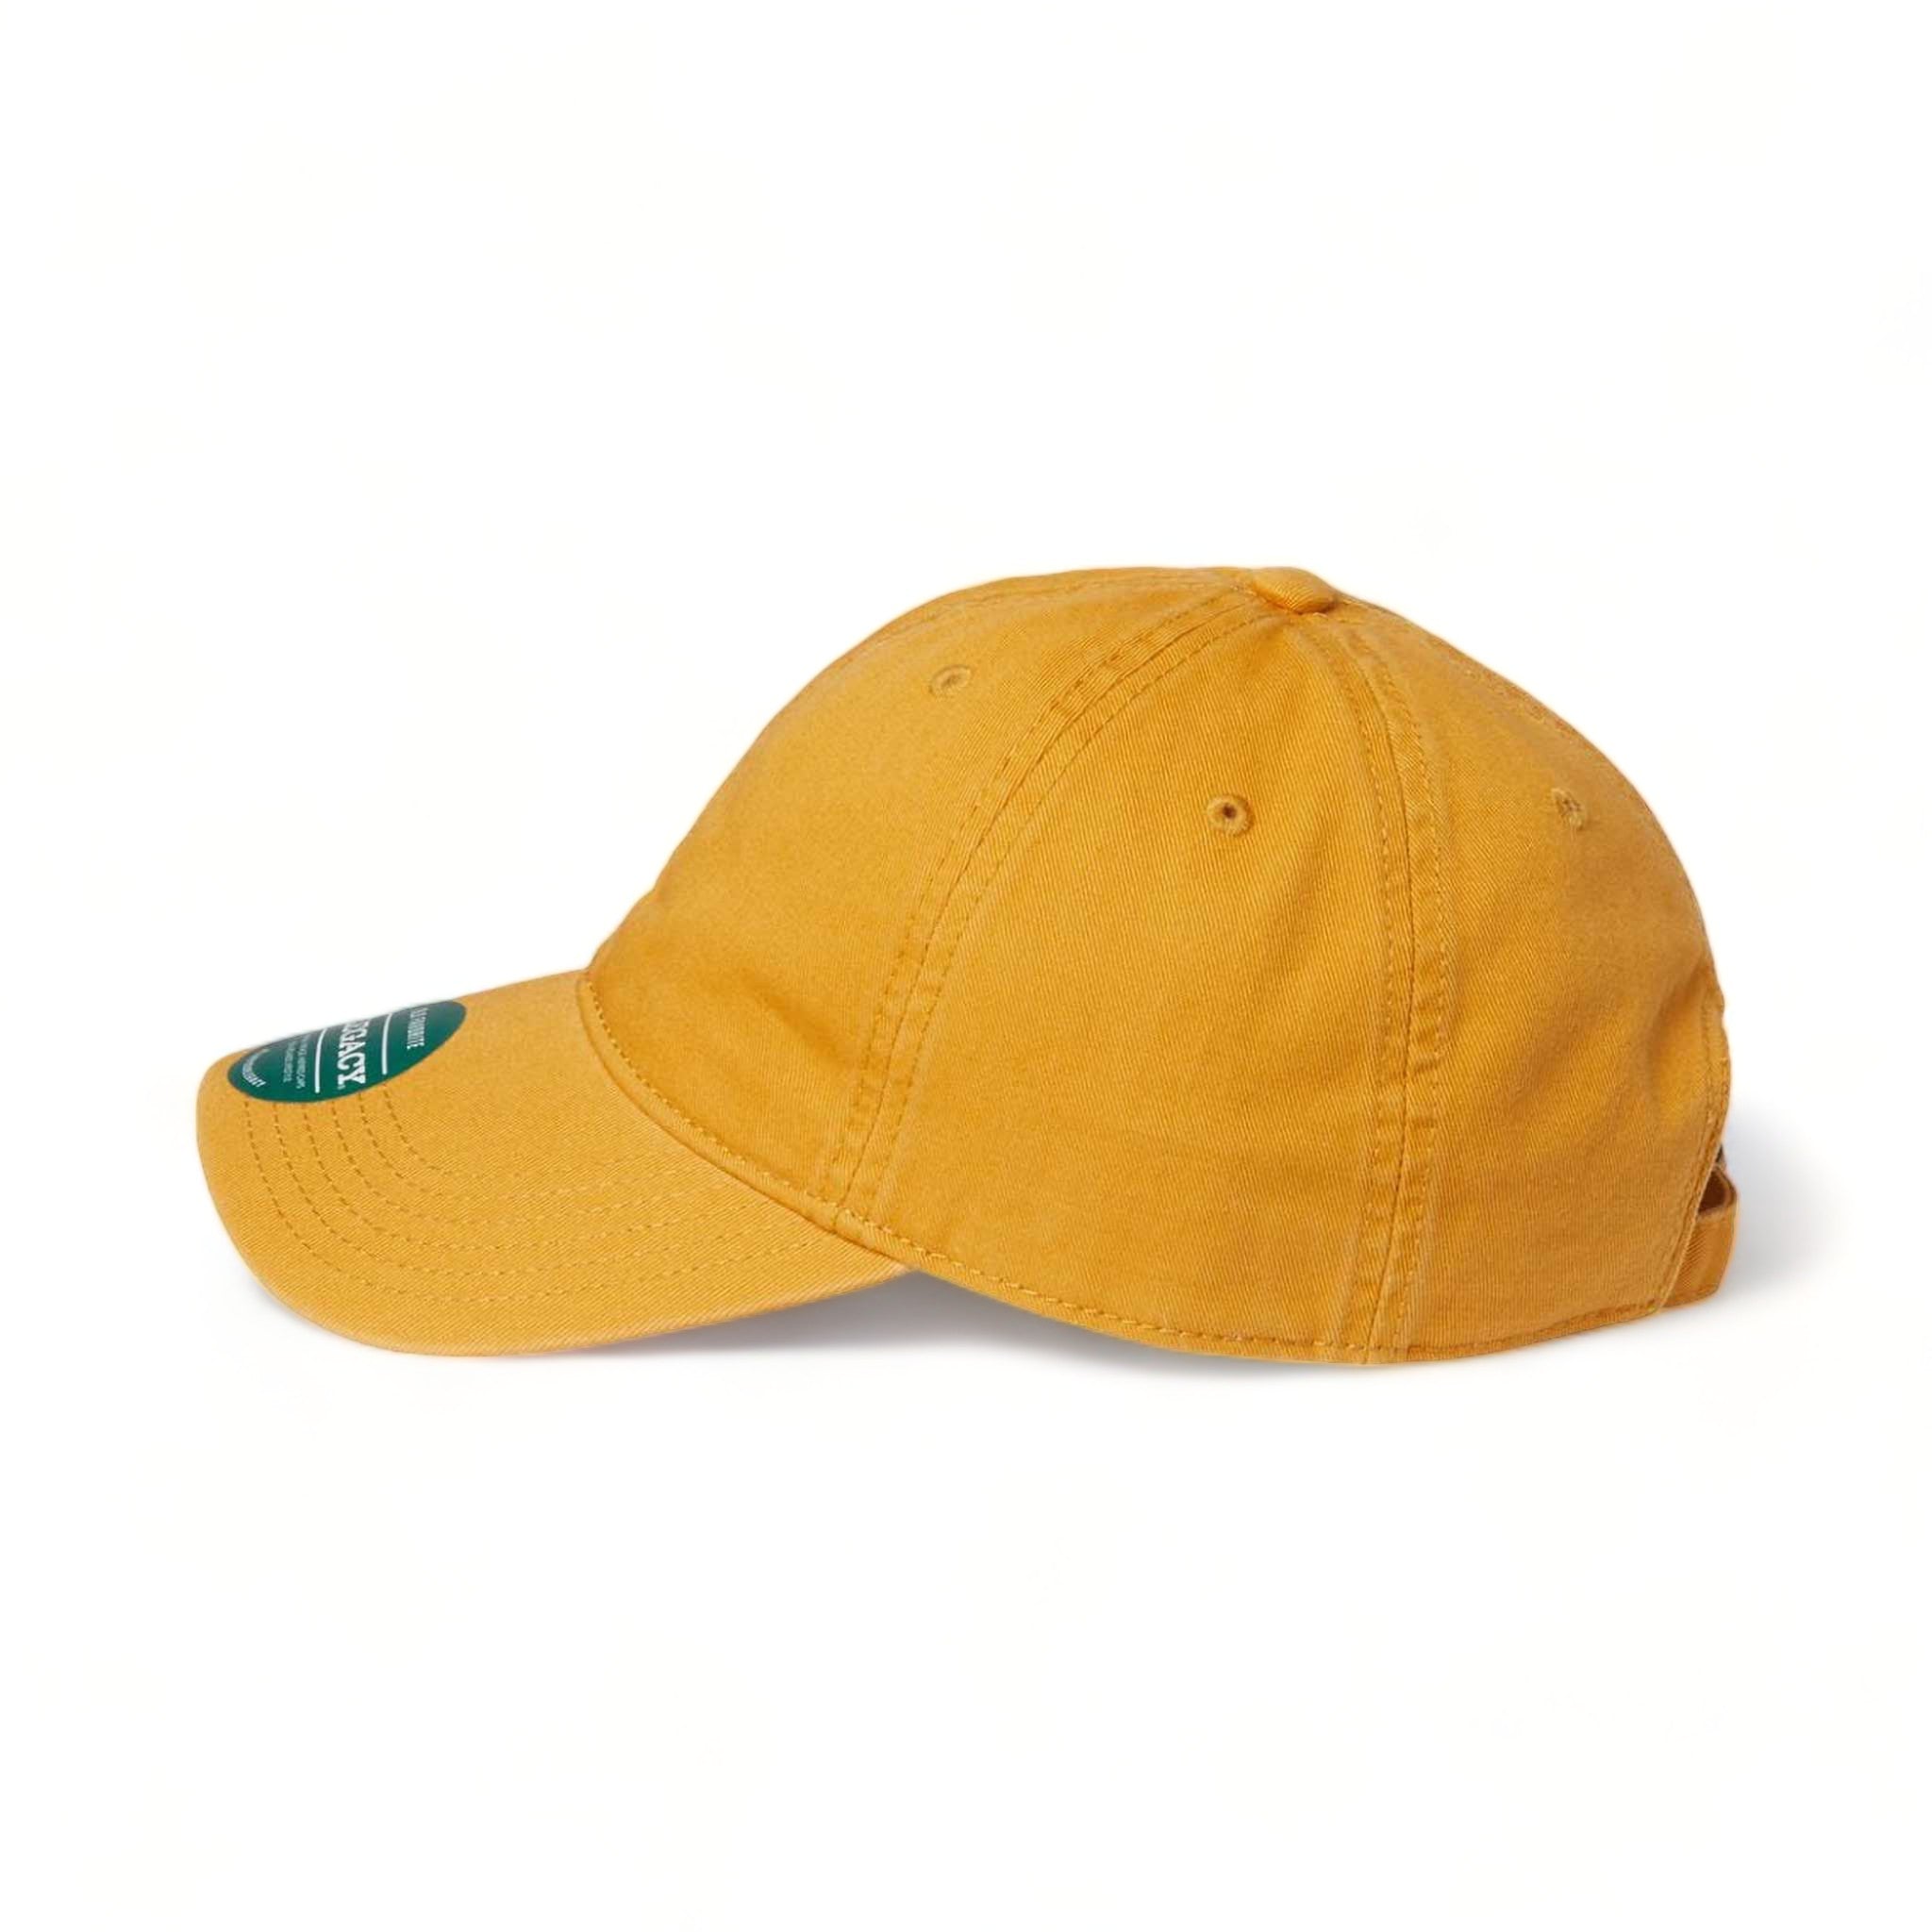 Side view of LEGACY EZA custom hat in mustard